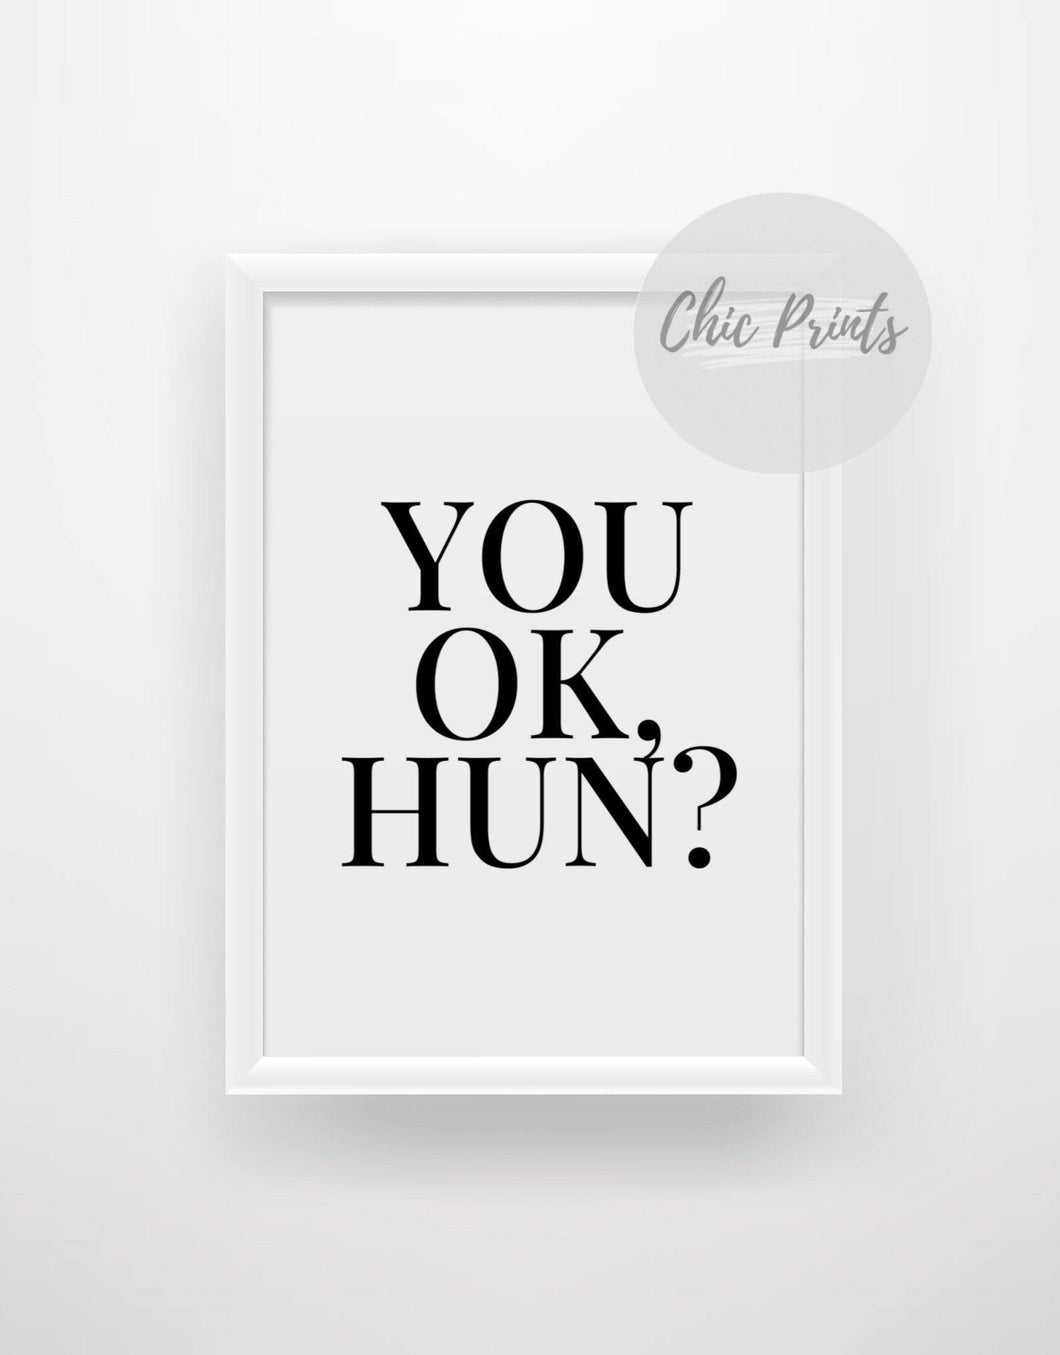 You ok, hun? - Chic Prints